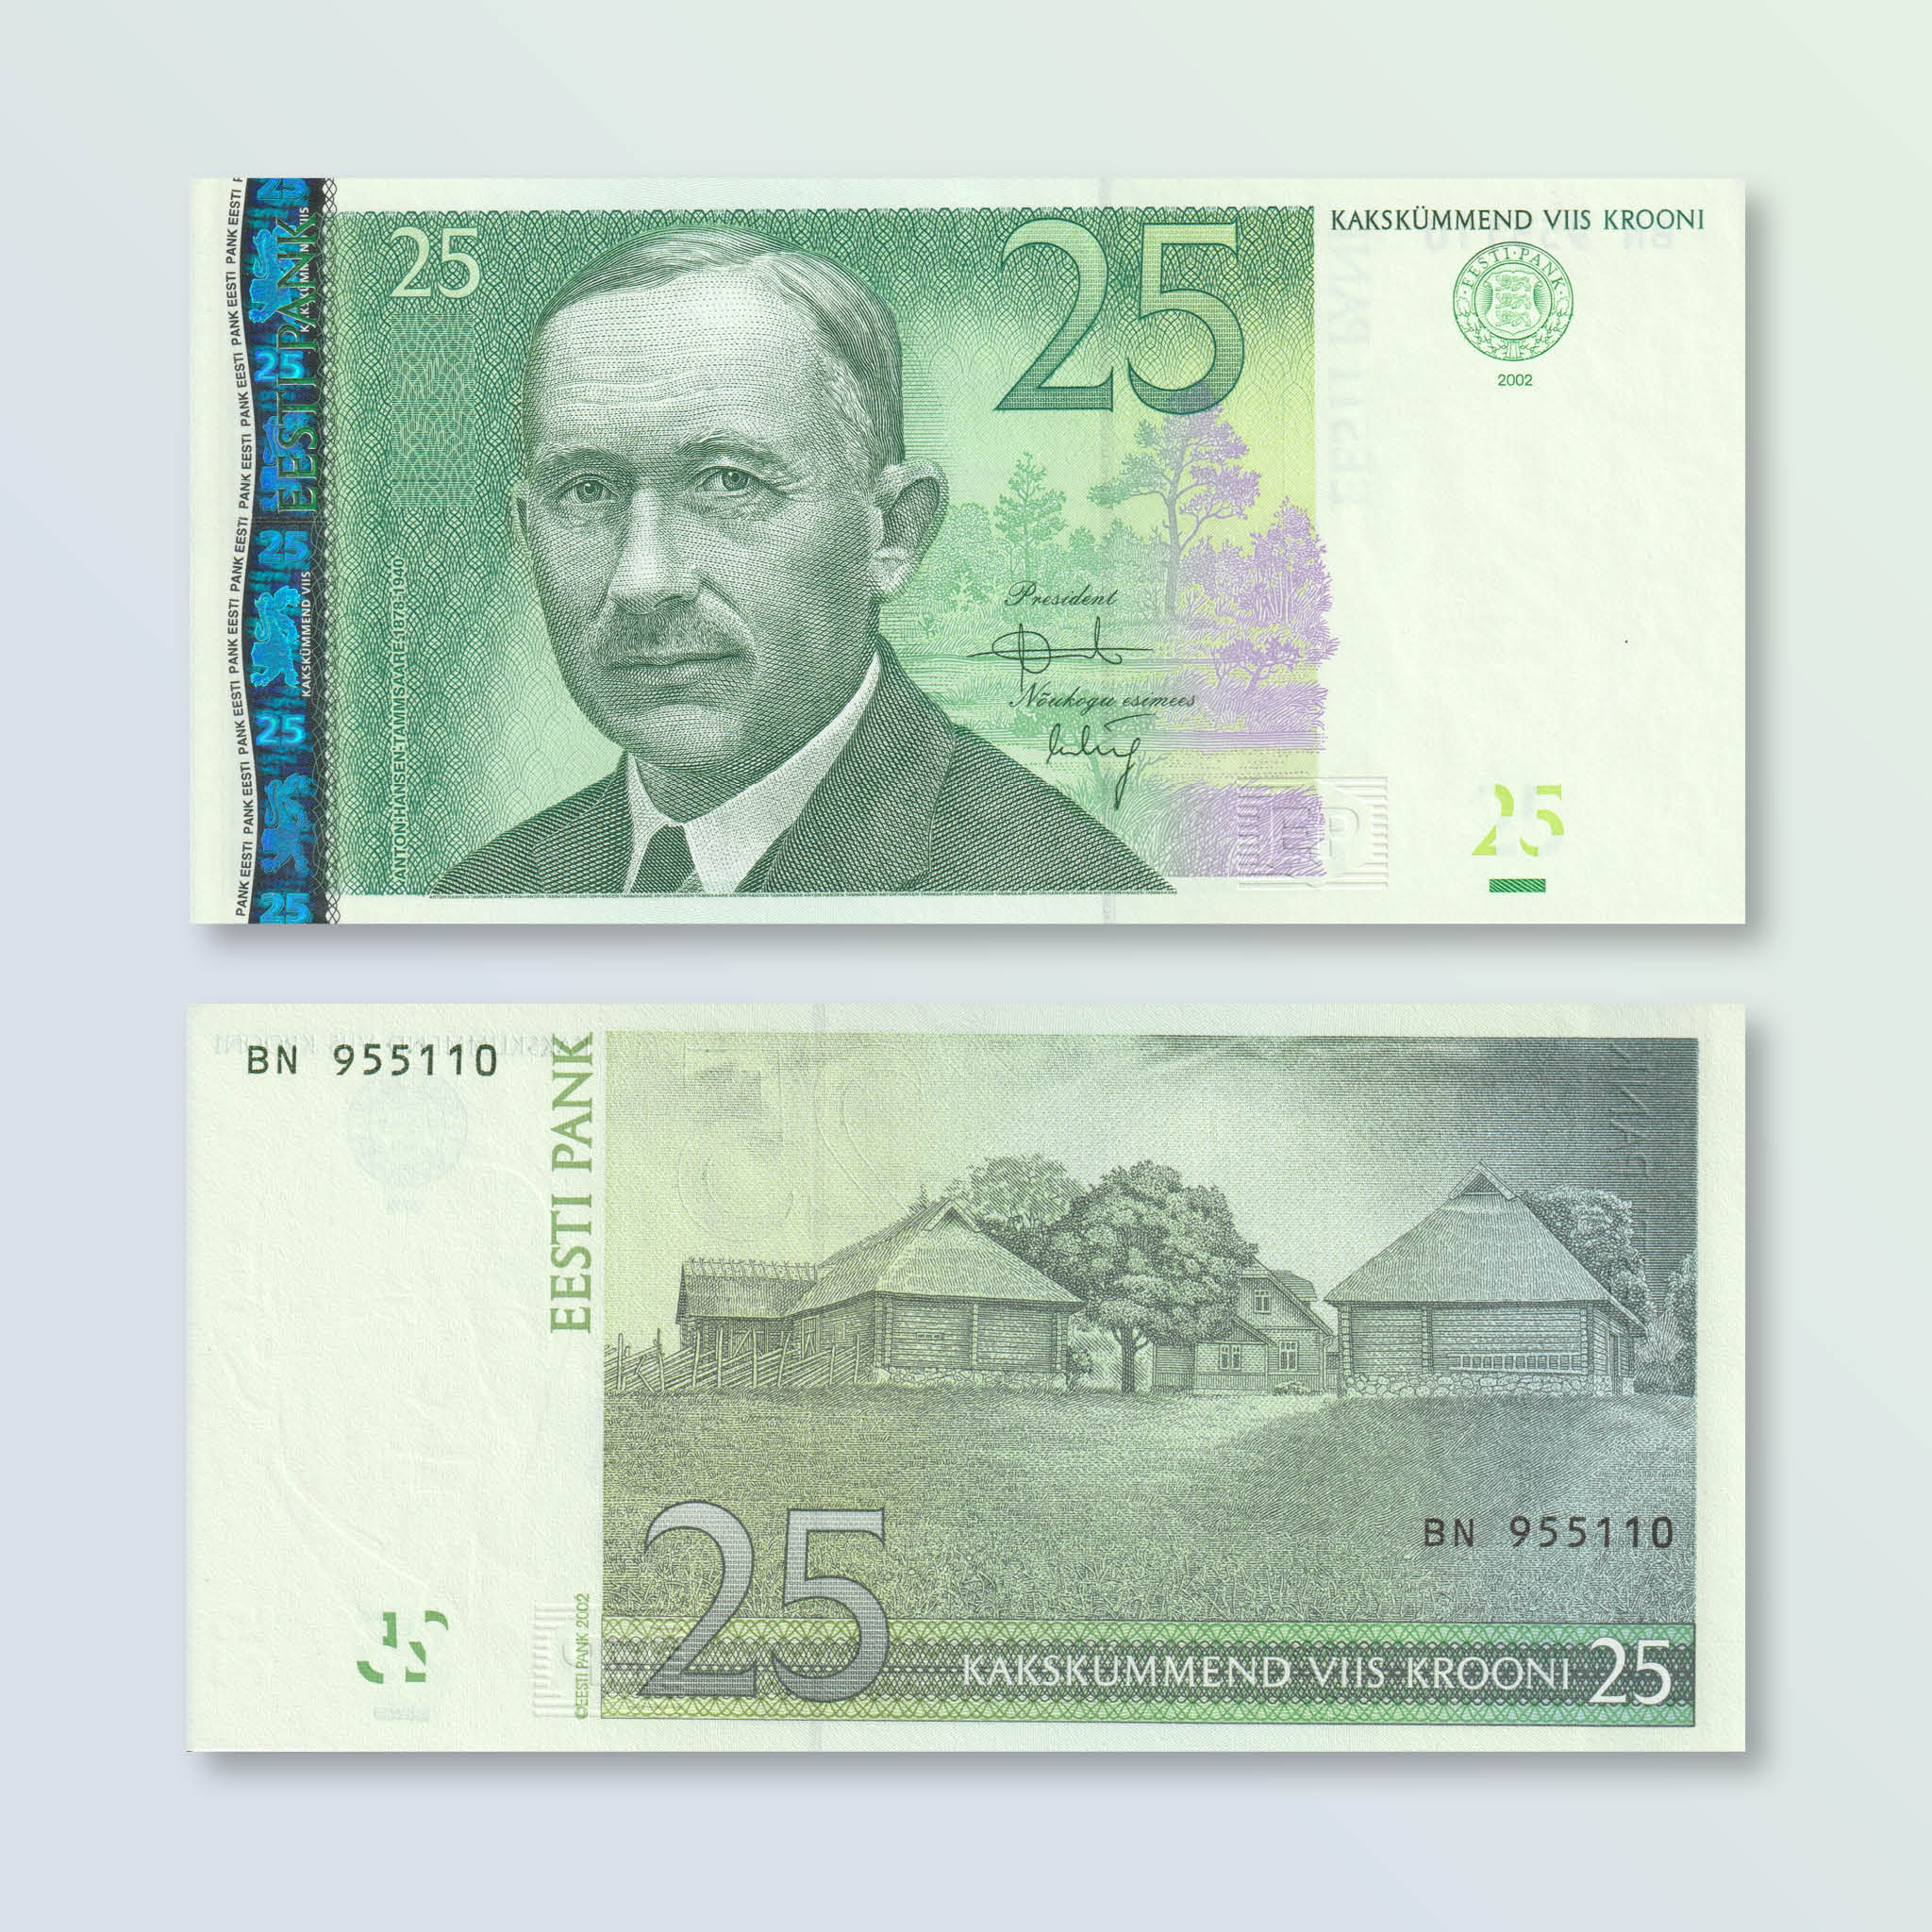 Estonia 25 Krooni, 2002, B229a, P84a, UNC - Robert's World Money - World Banknotes